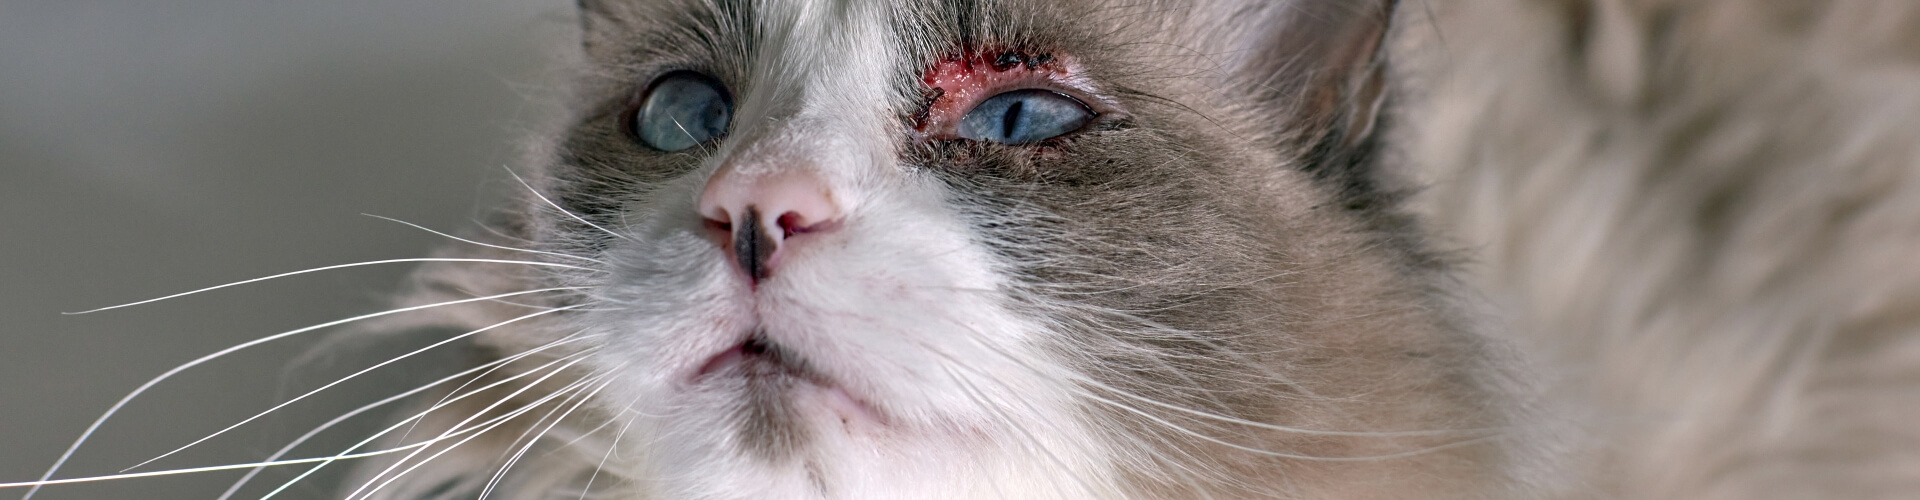 Verletzungen am Katzenauge - Wann muss ich zum Tierarzt